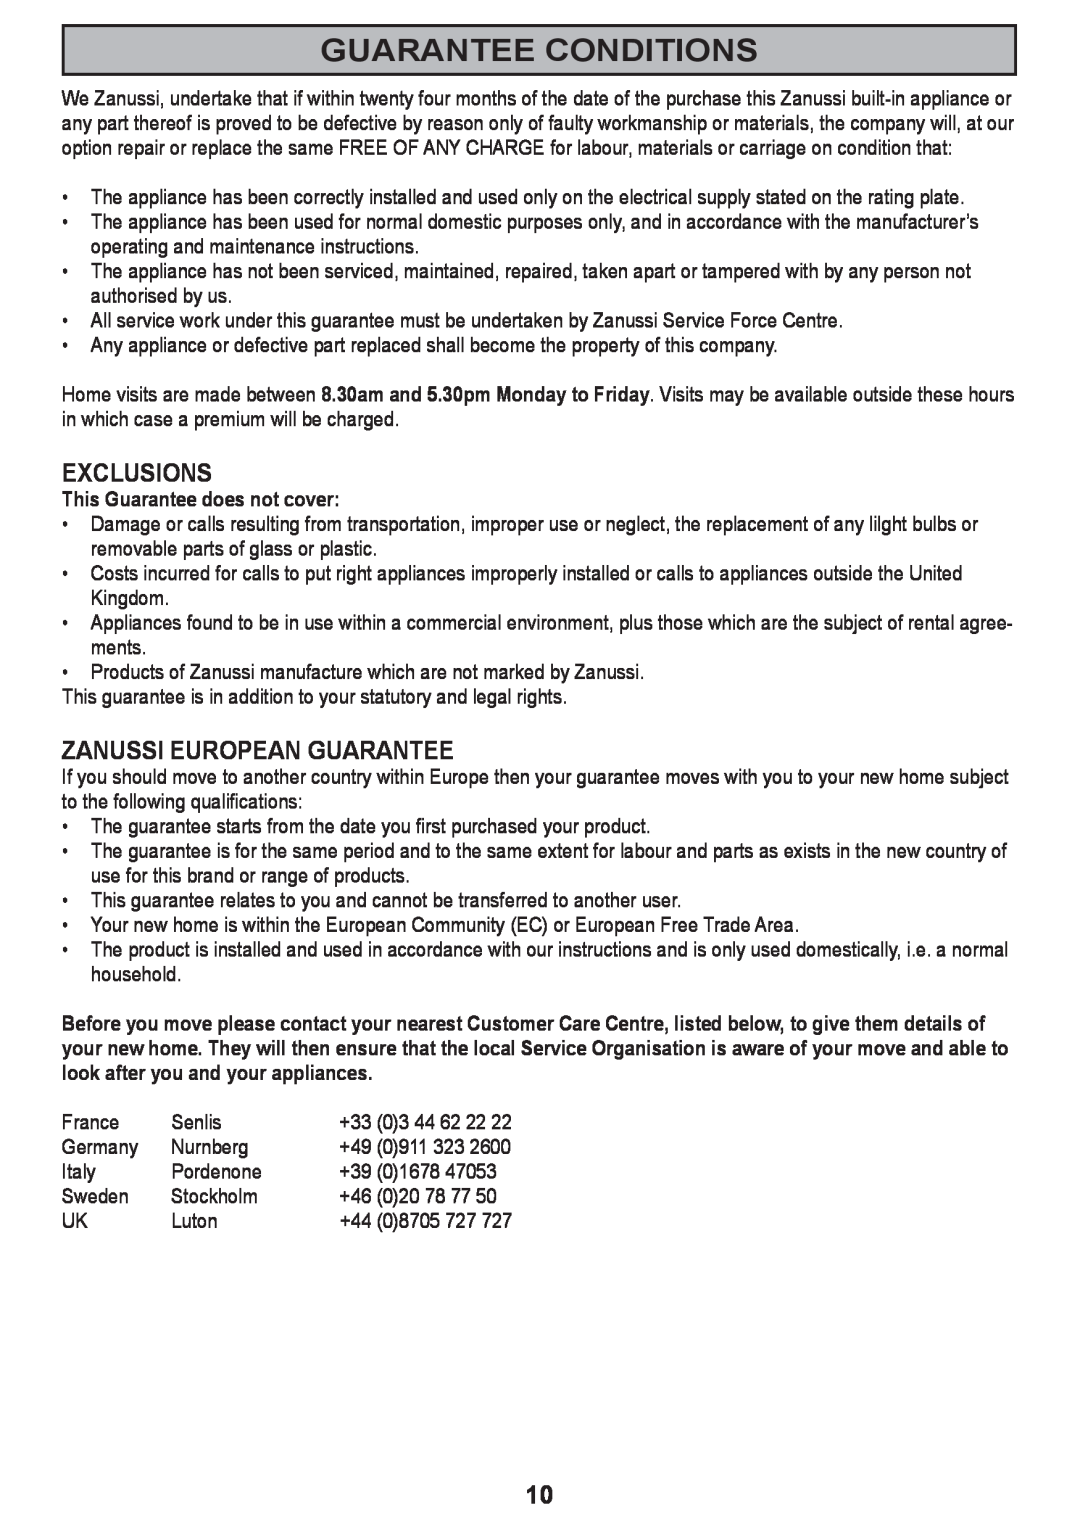 Zanussi ZHC 590 manual Guarantee Conditions, Exclusions, Zanussi European Guarantee 